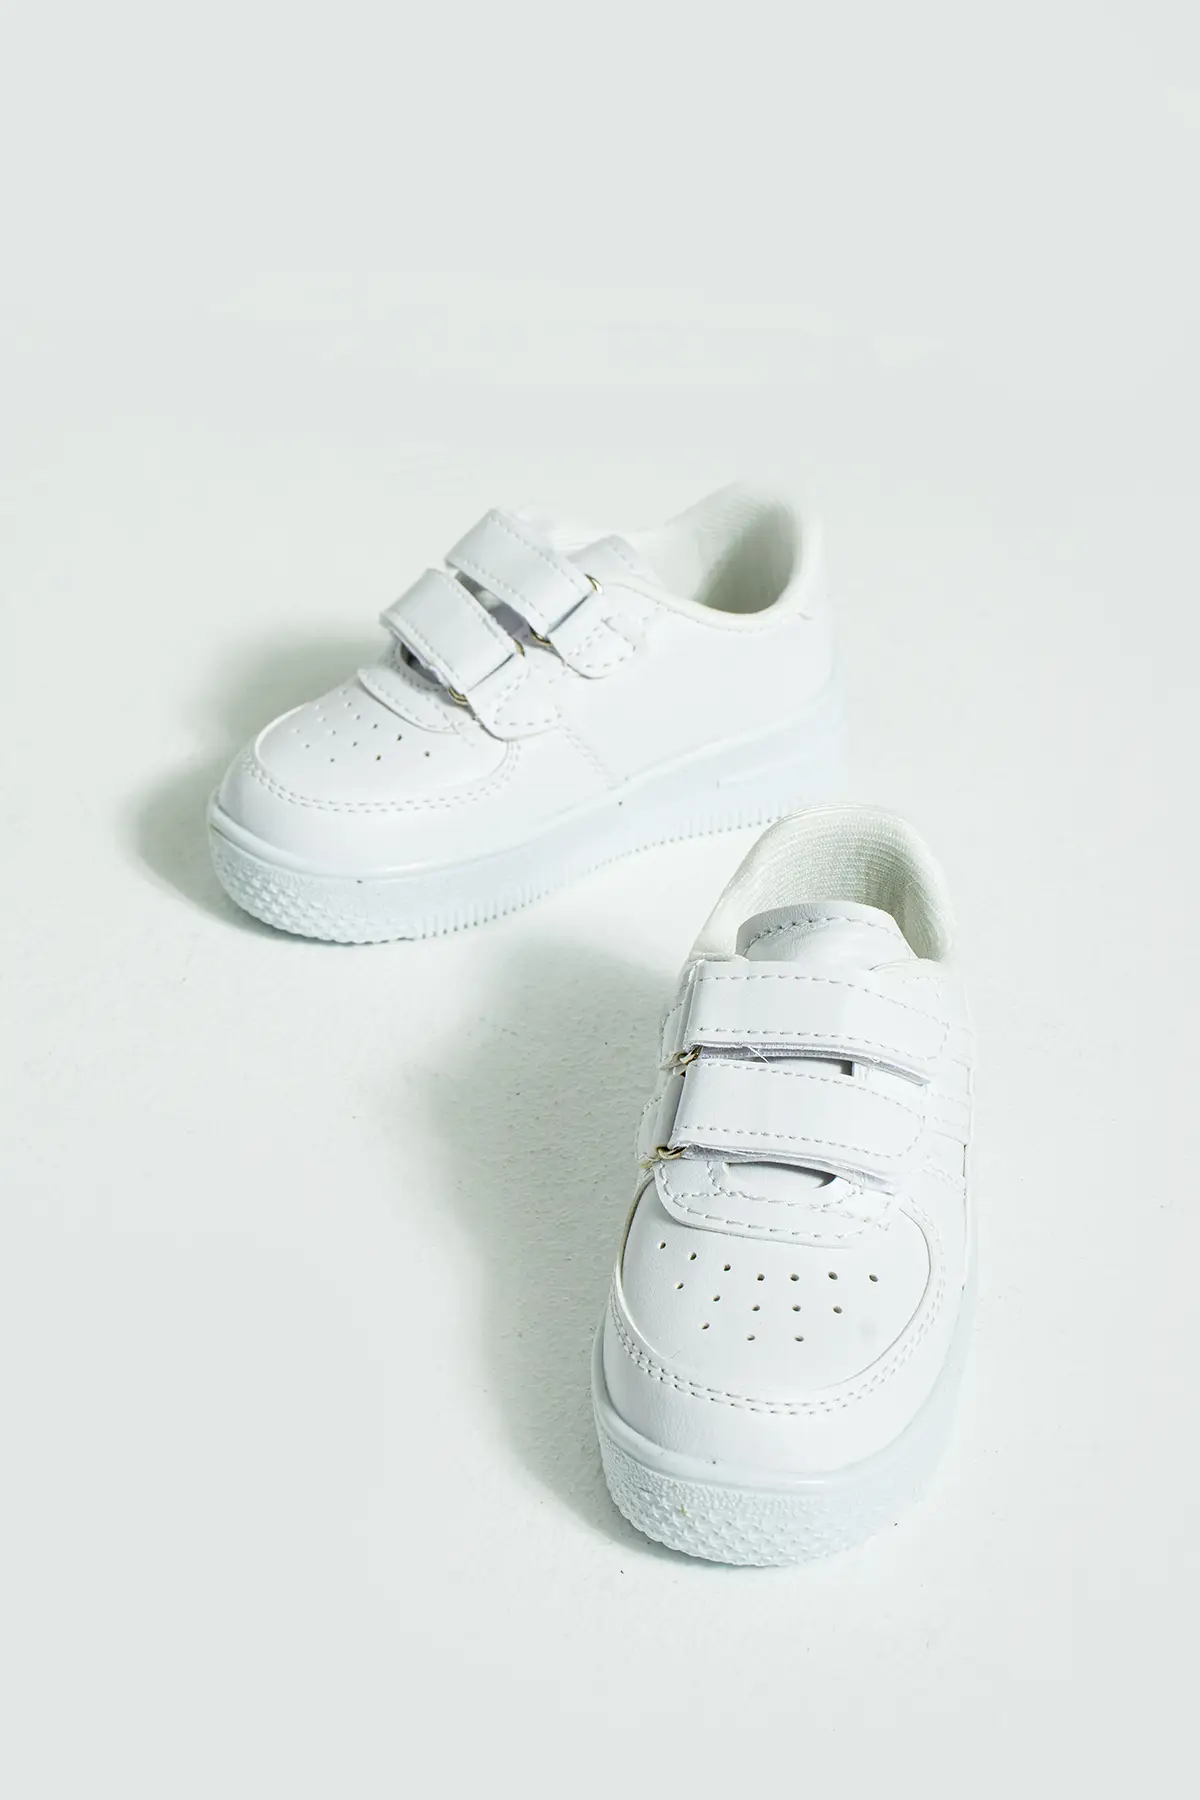 Pembe Potin Rahat Taban Cırtlı Çocuk Sneakers 001-700-23 - Beyaz